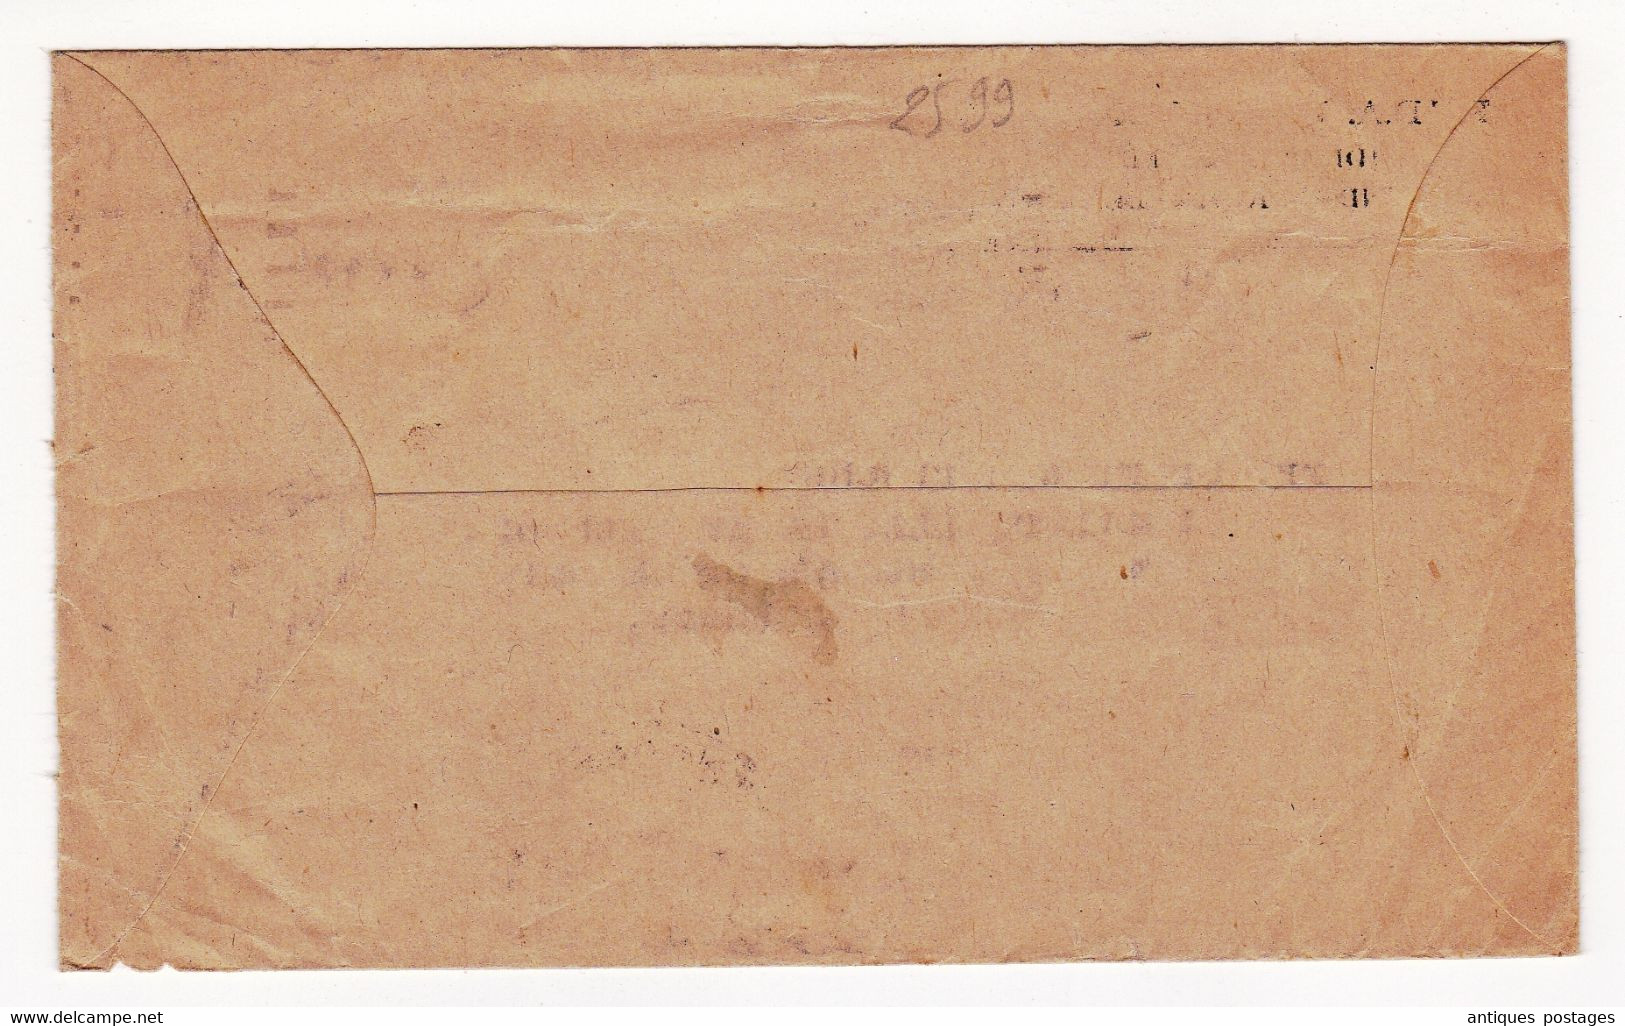 Lettre 1946 Angleterre Leicester Taxe Belgique British Unit Ltd Midland Chambers - Cartas & Documentos